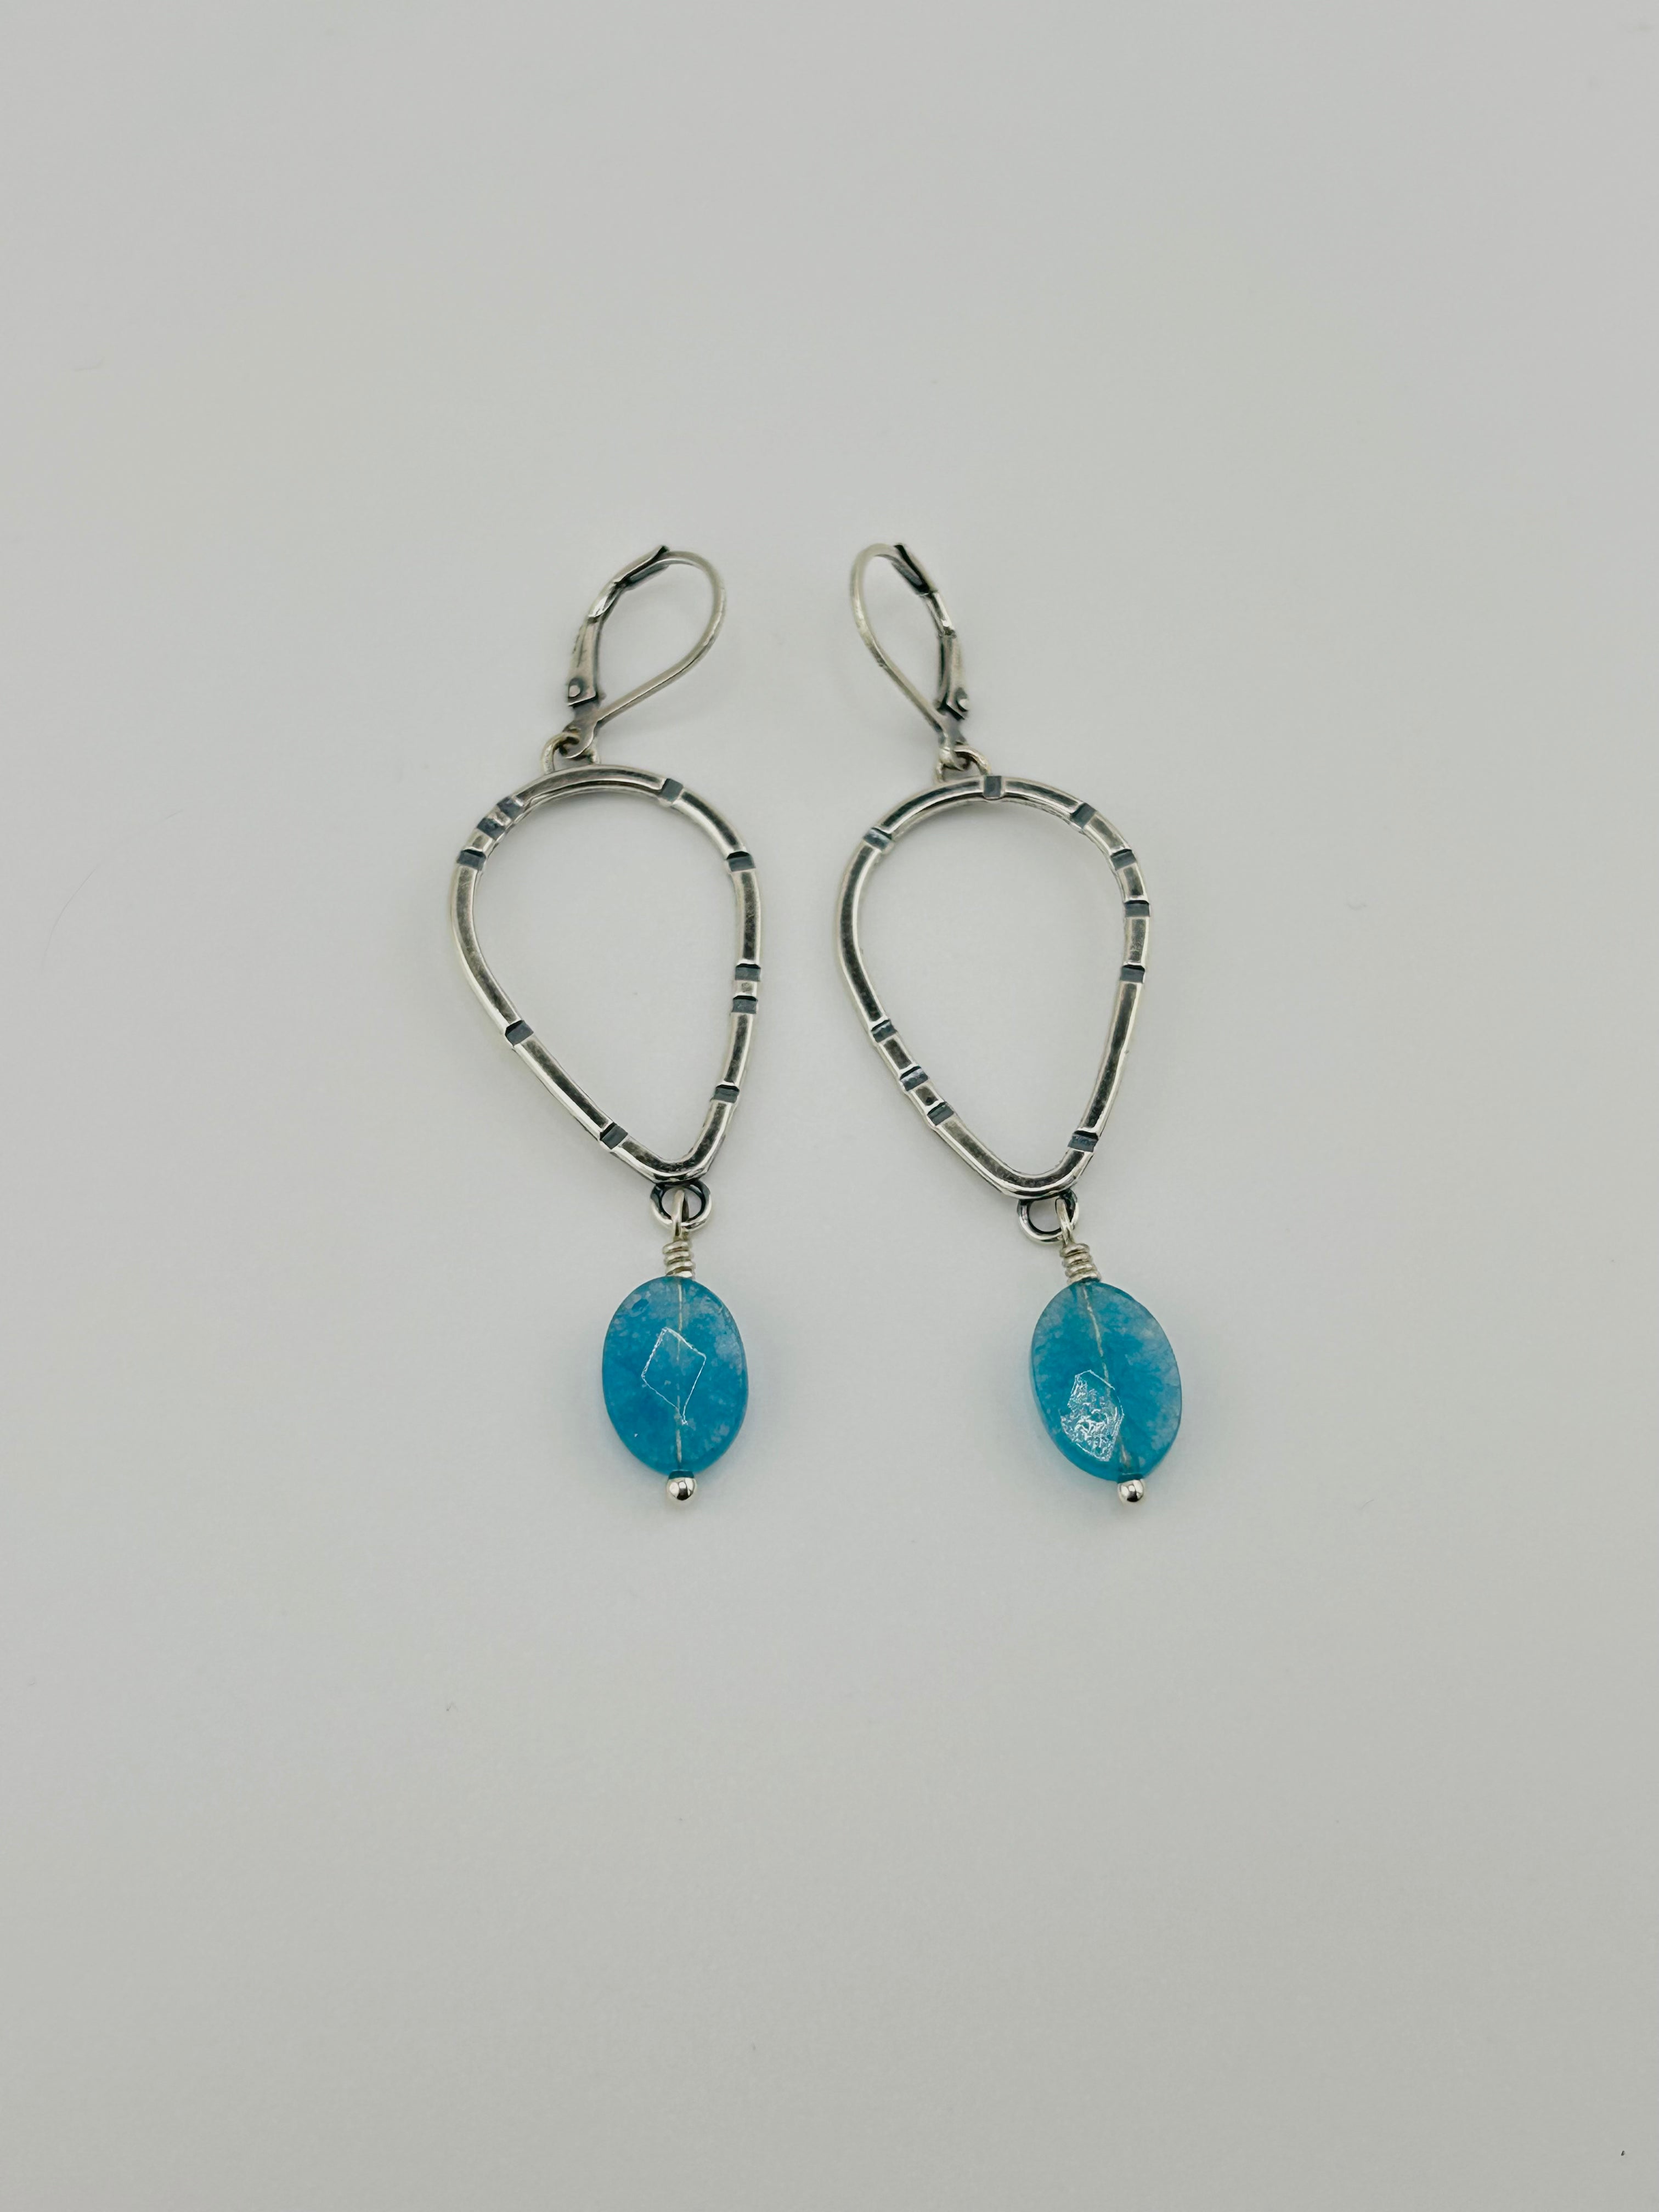 Anvil Teardrop Hoop Earrings with Stamped Sterling Silver and Blue Aqua Quartz